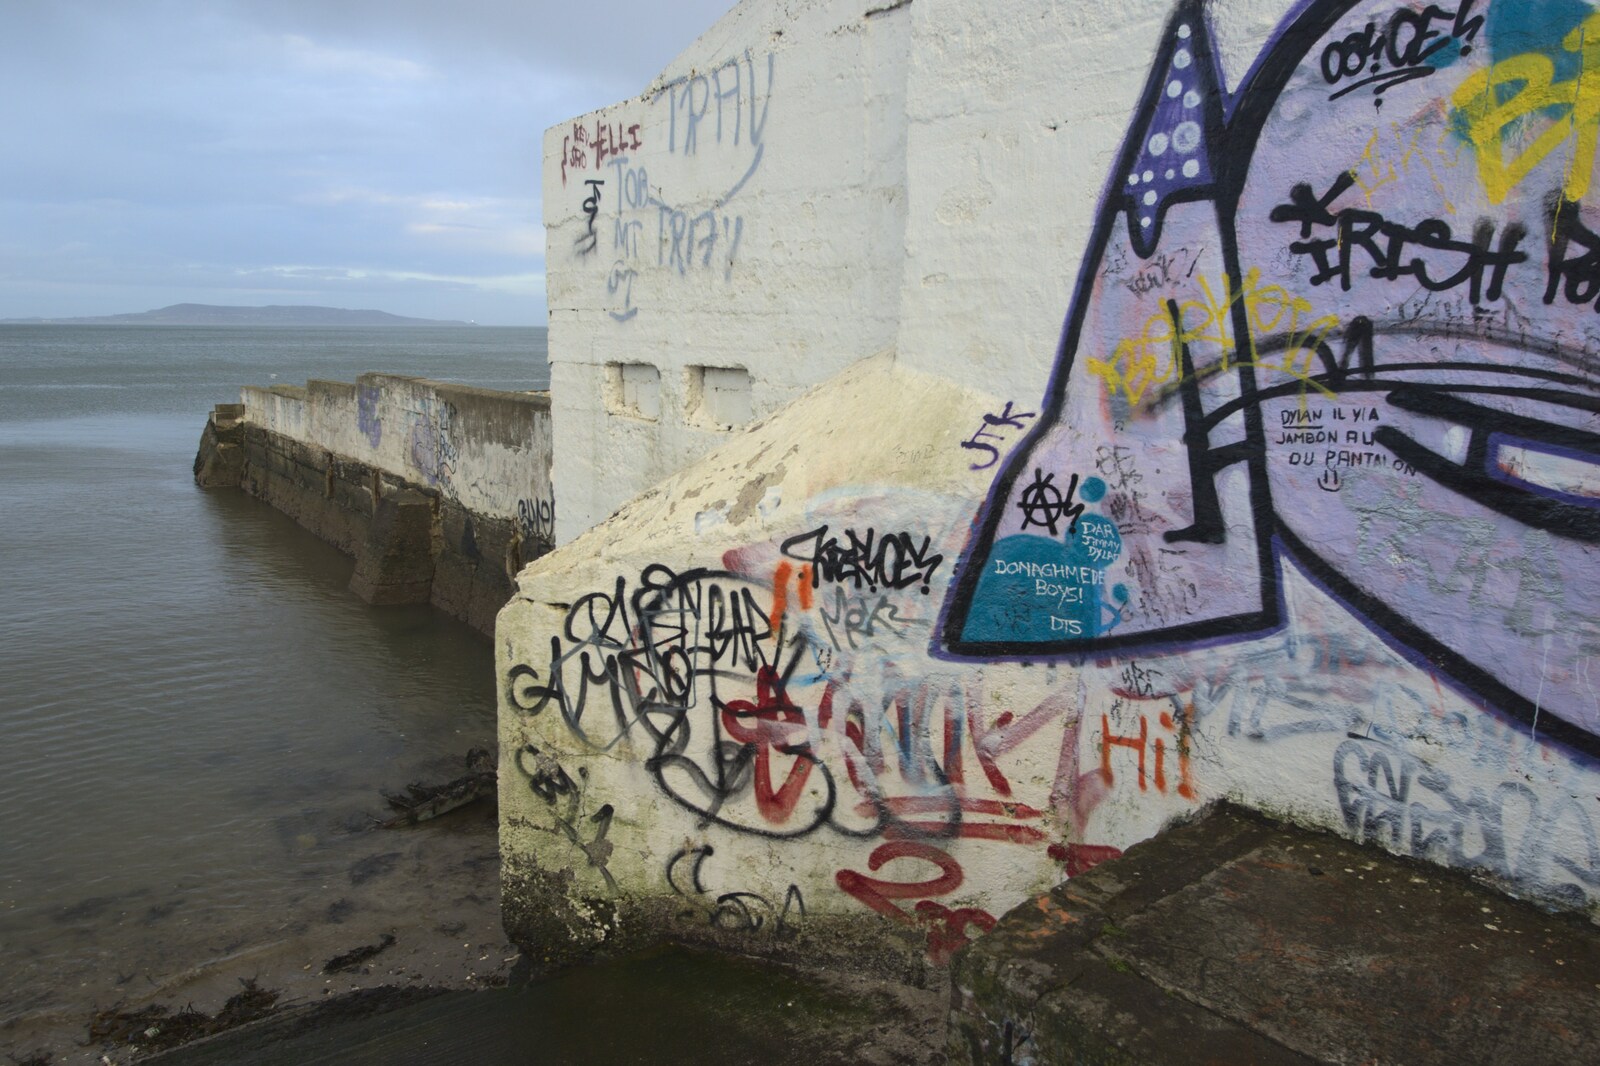 Graffiti onthe baths from Monkstown Graffiti and Dereliction, County Dublin, Ireland - 26th December 2009